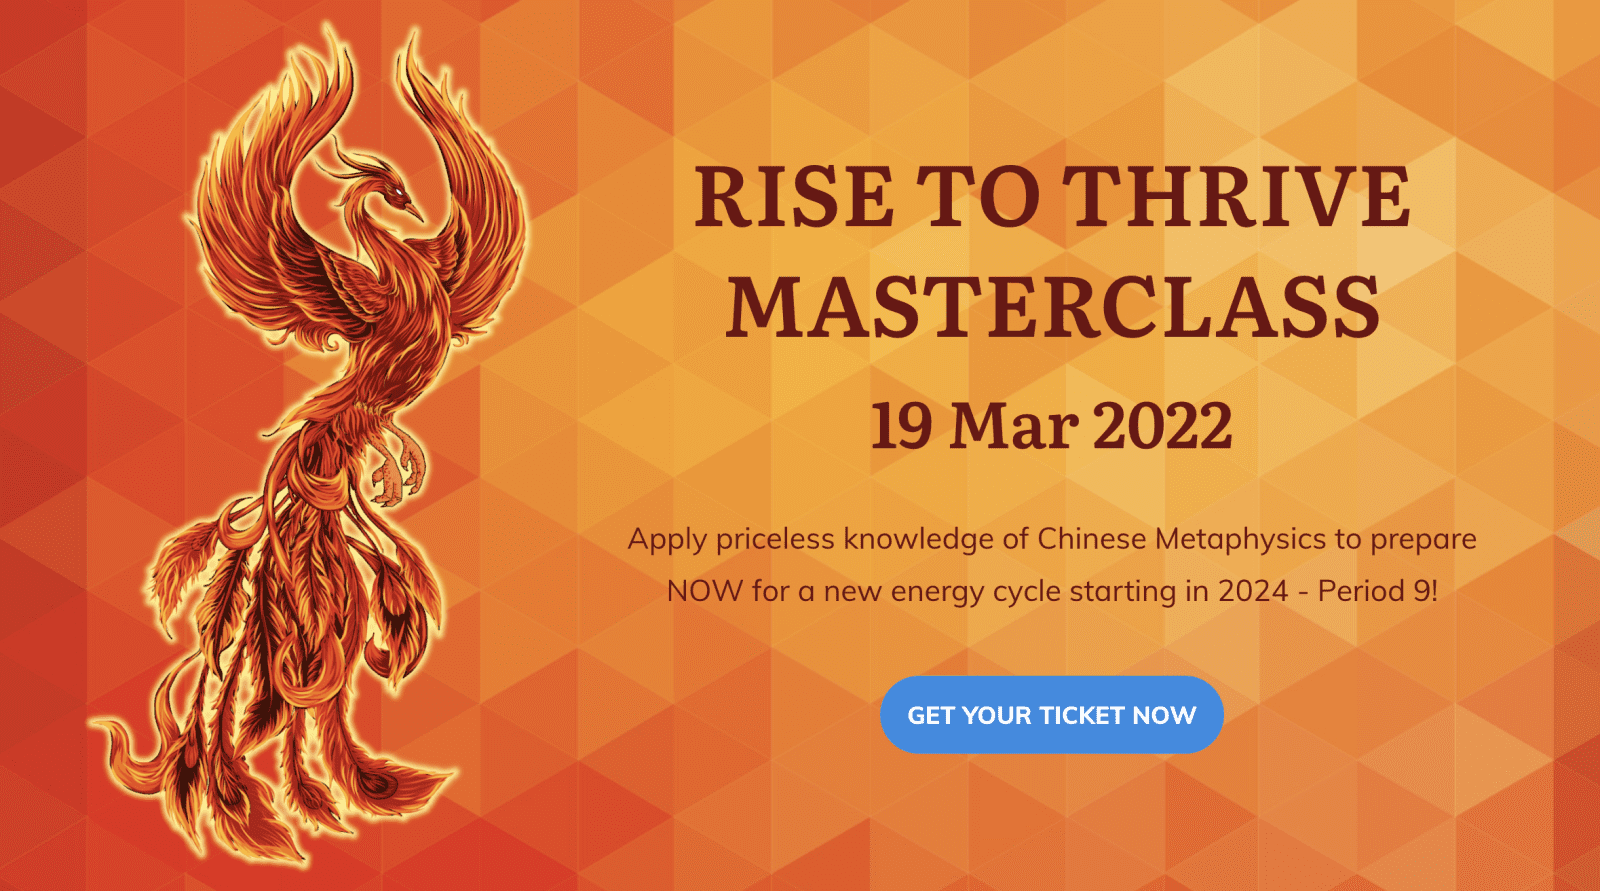 Изображение [Jessie Lee] Мастер класс для процветания Rise to thrive masterclass (2022) в посте 261243